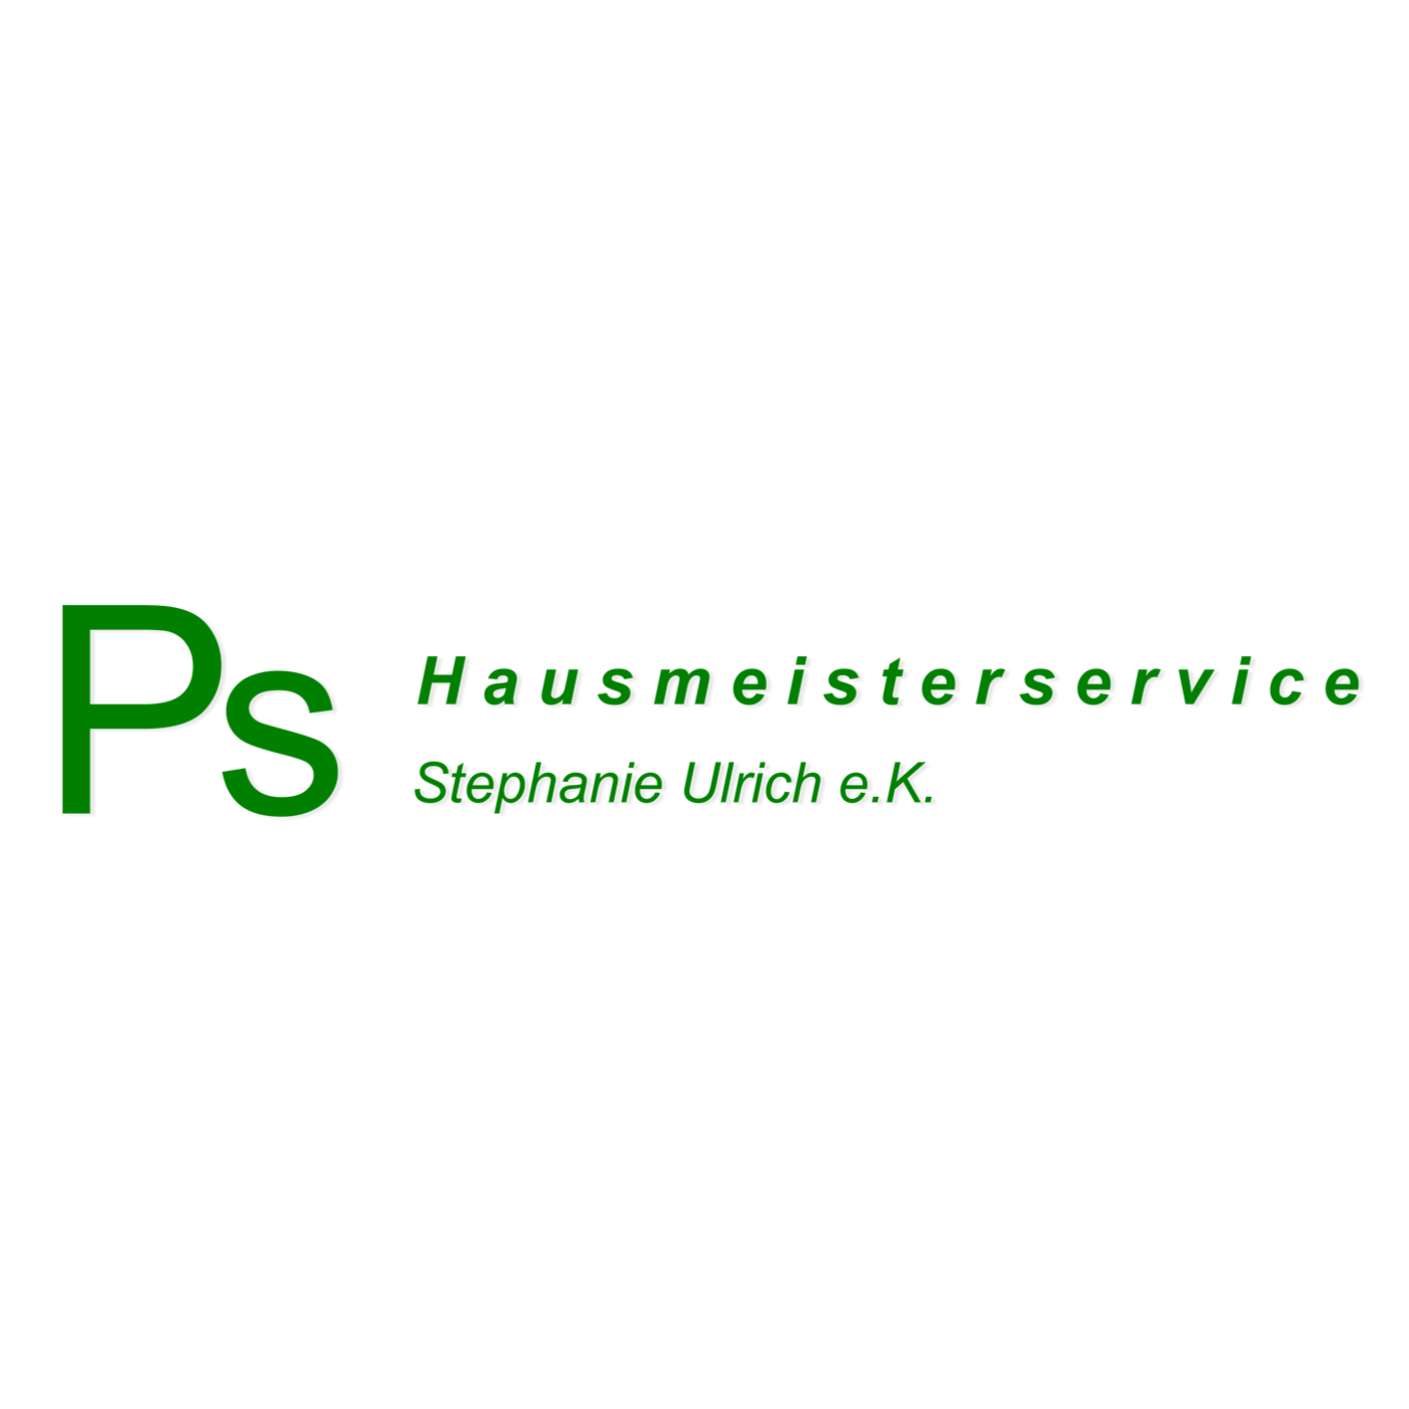 PS Hausmeisterservice in Nürnberg - Logo